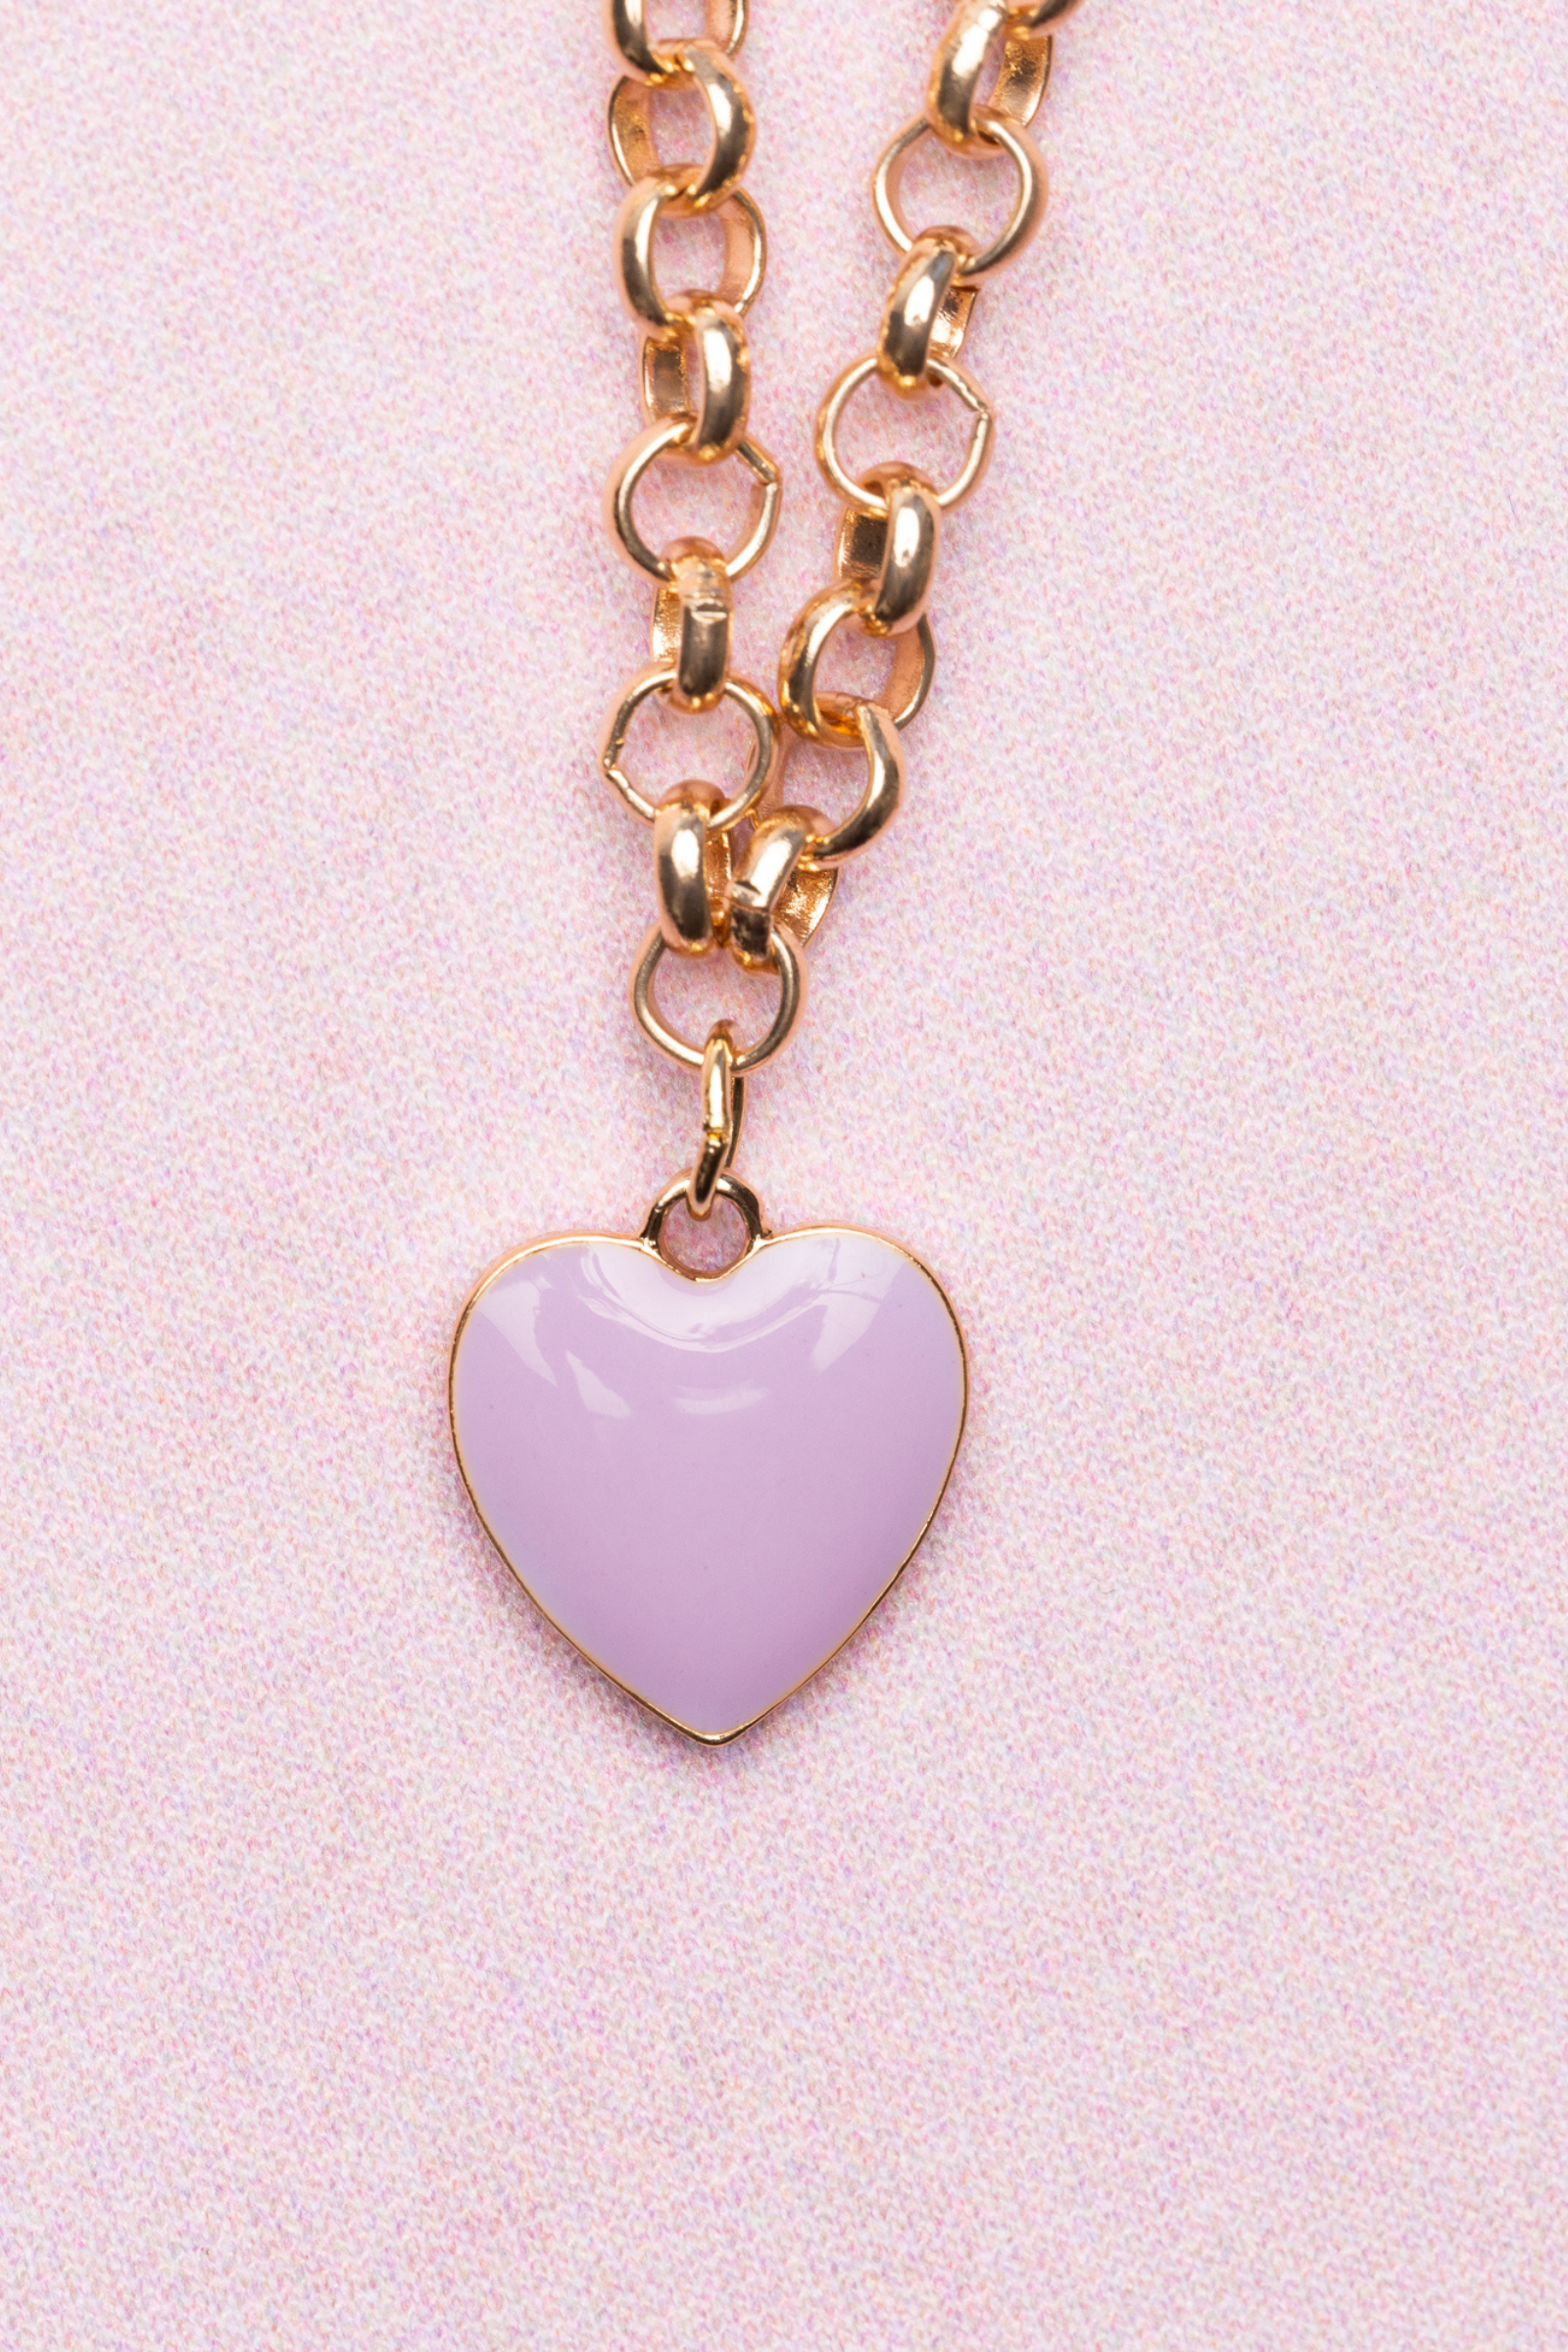 Chunky Pink Teardrop Layered Statement Necklace Multi Strand Costume  Jewelry | eBay